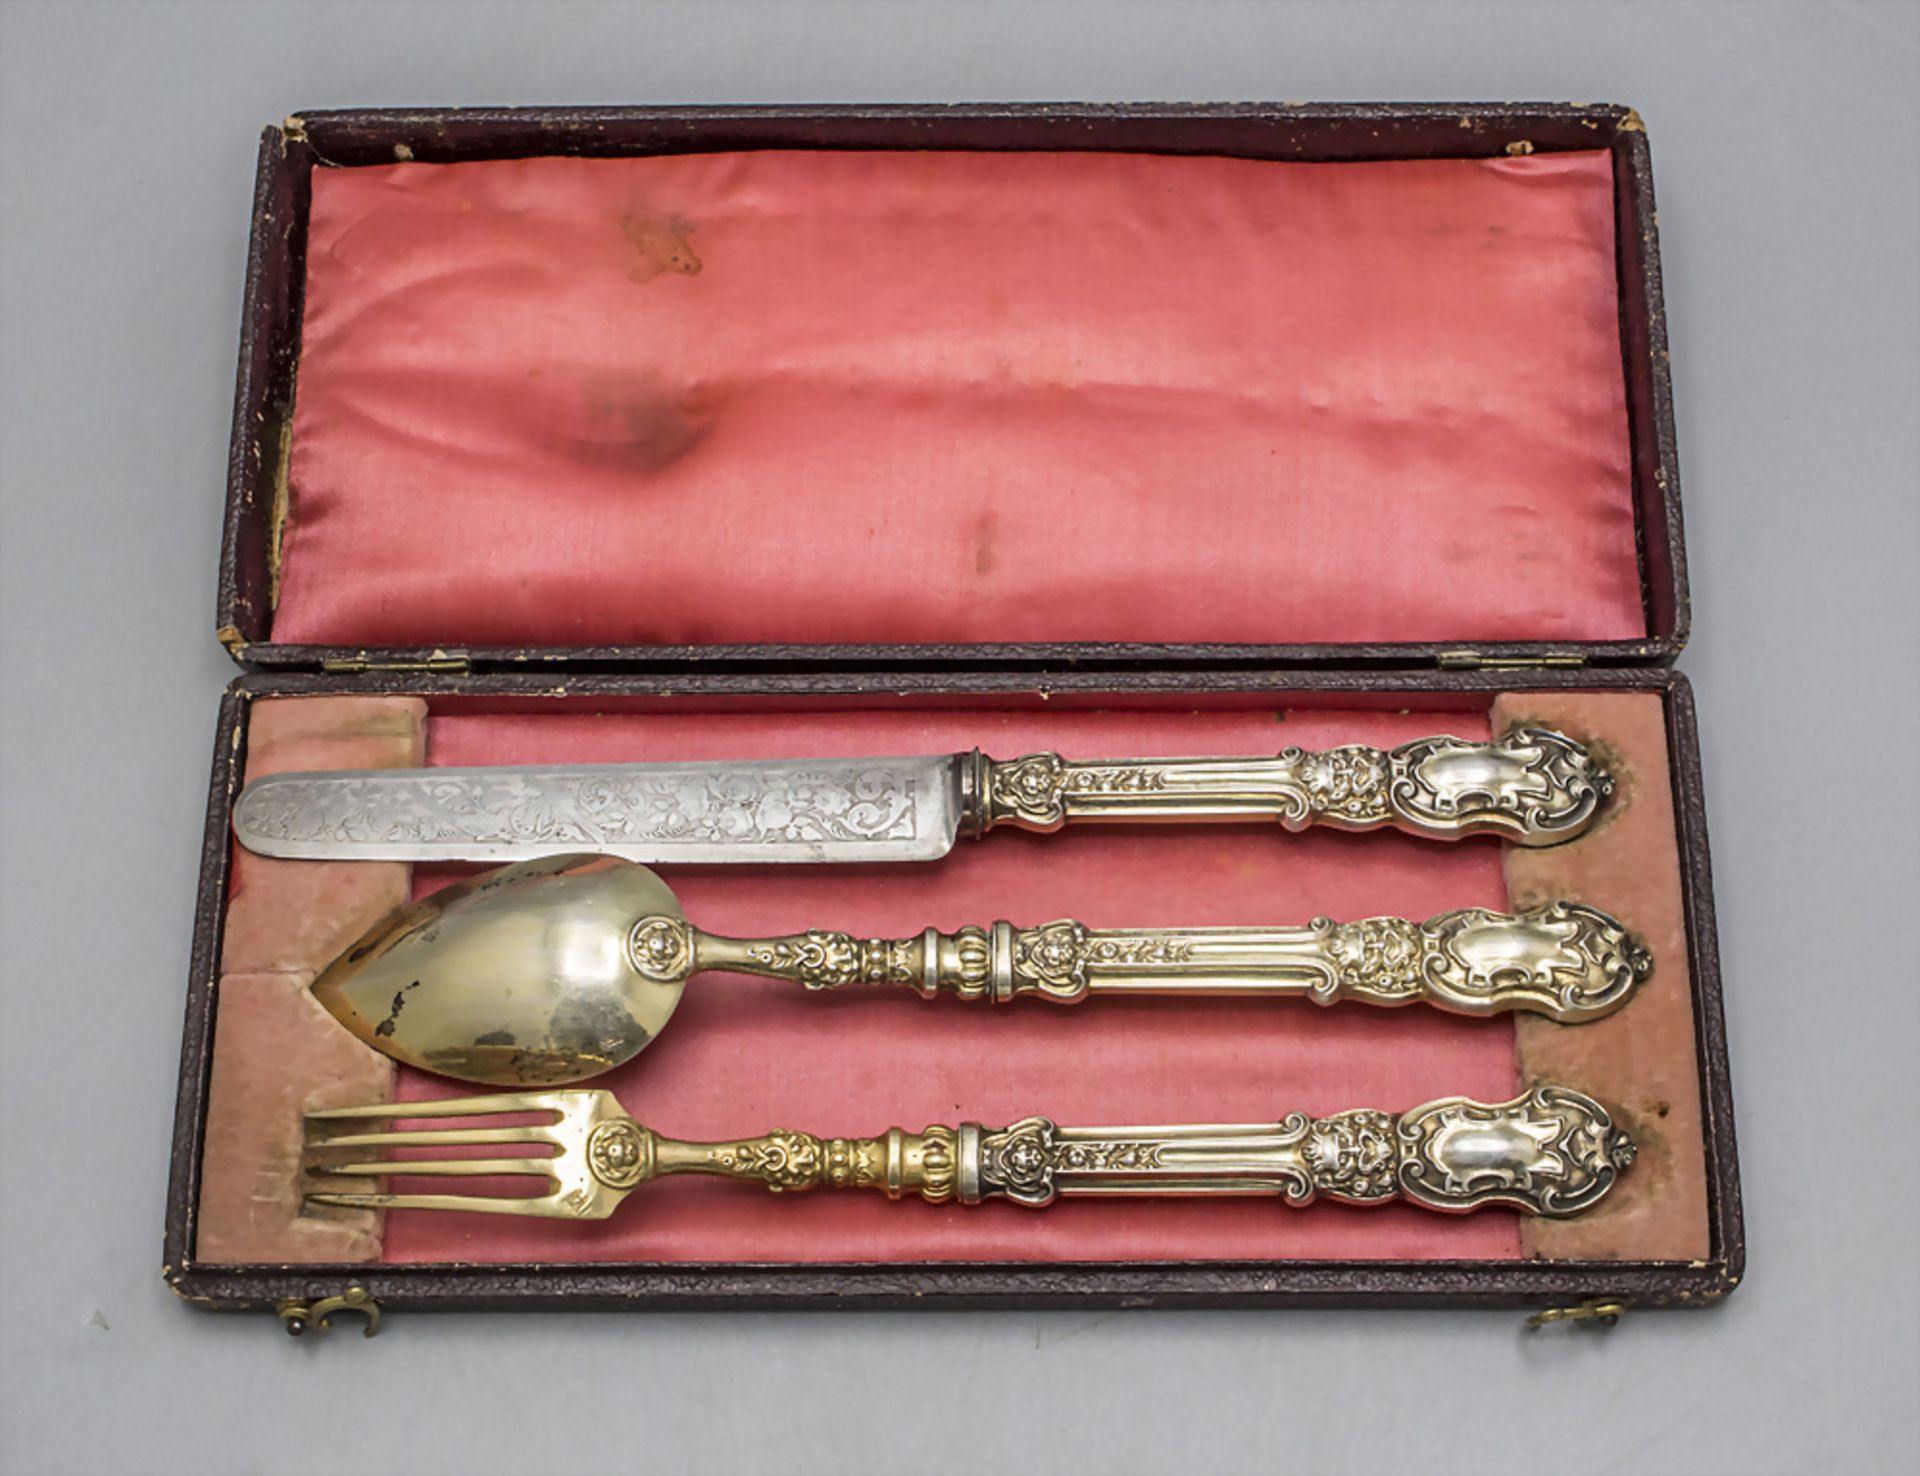 3 Teile Besteck im Etui / 3 pieces of silver cutlery in a box, Joseph Henry, Paris, 1841-1846